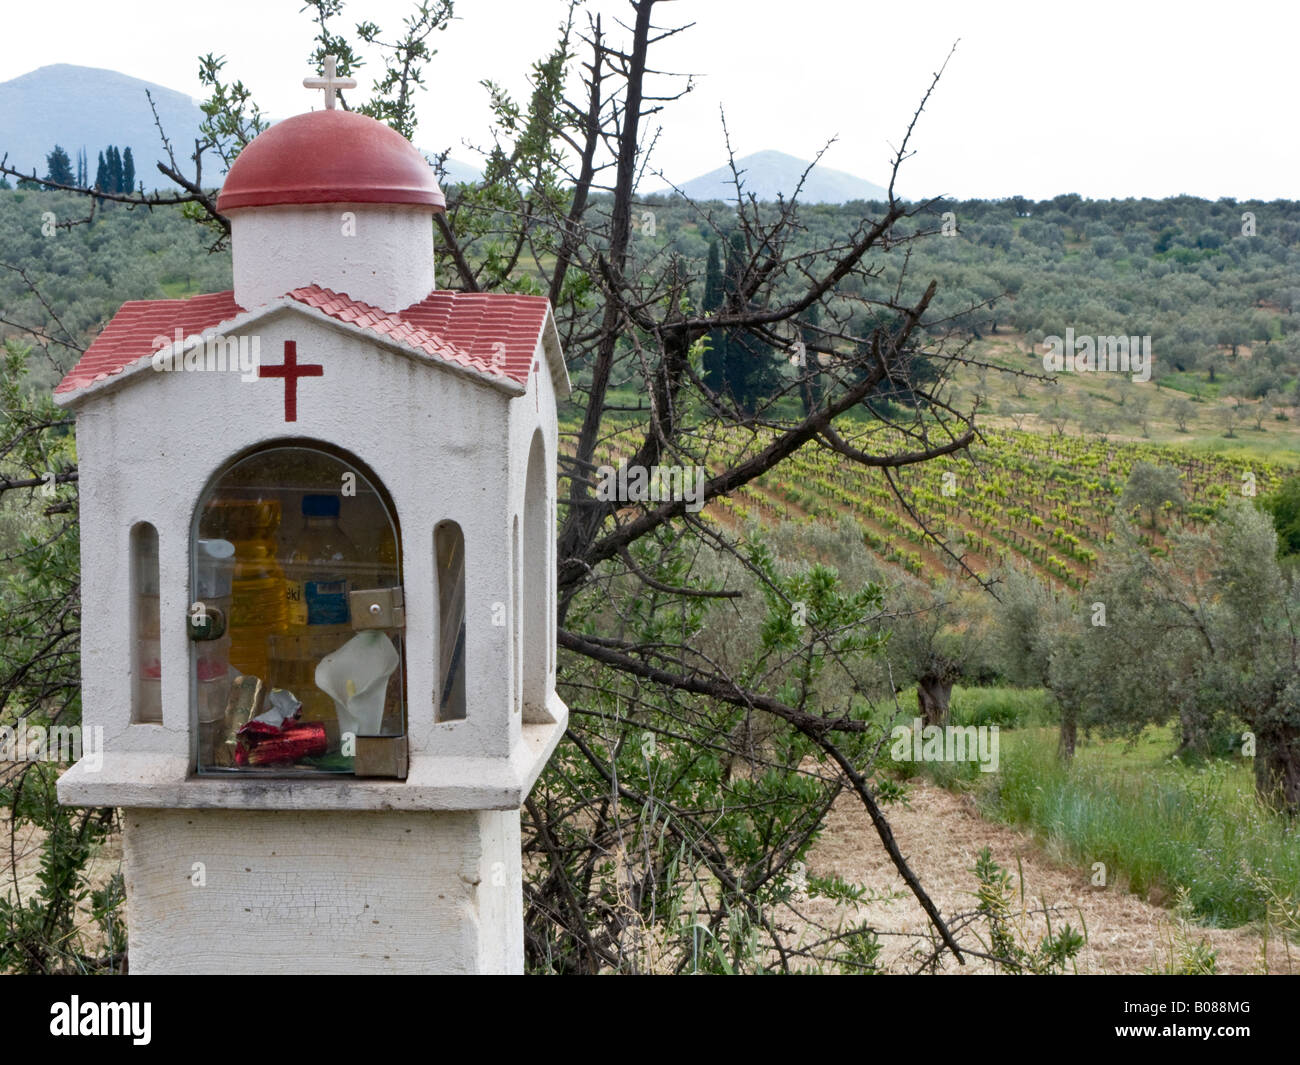 roadside shrine, near Corinth, Greece, beside vineyard Stock Photo